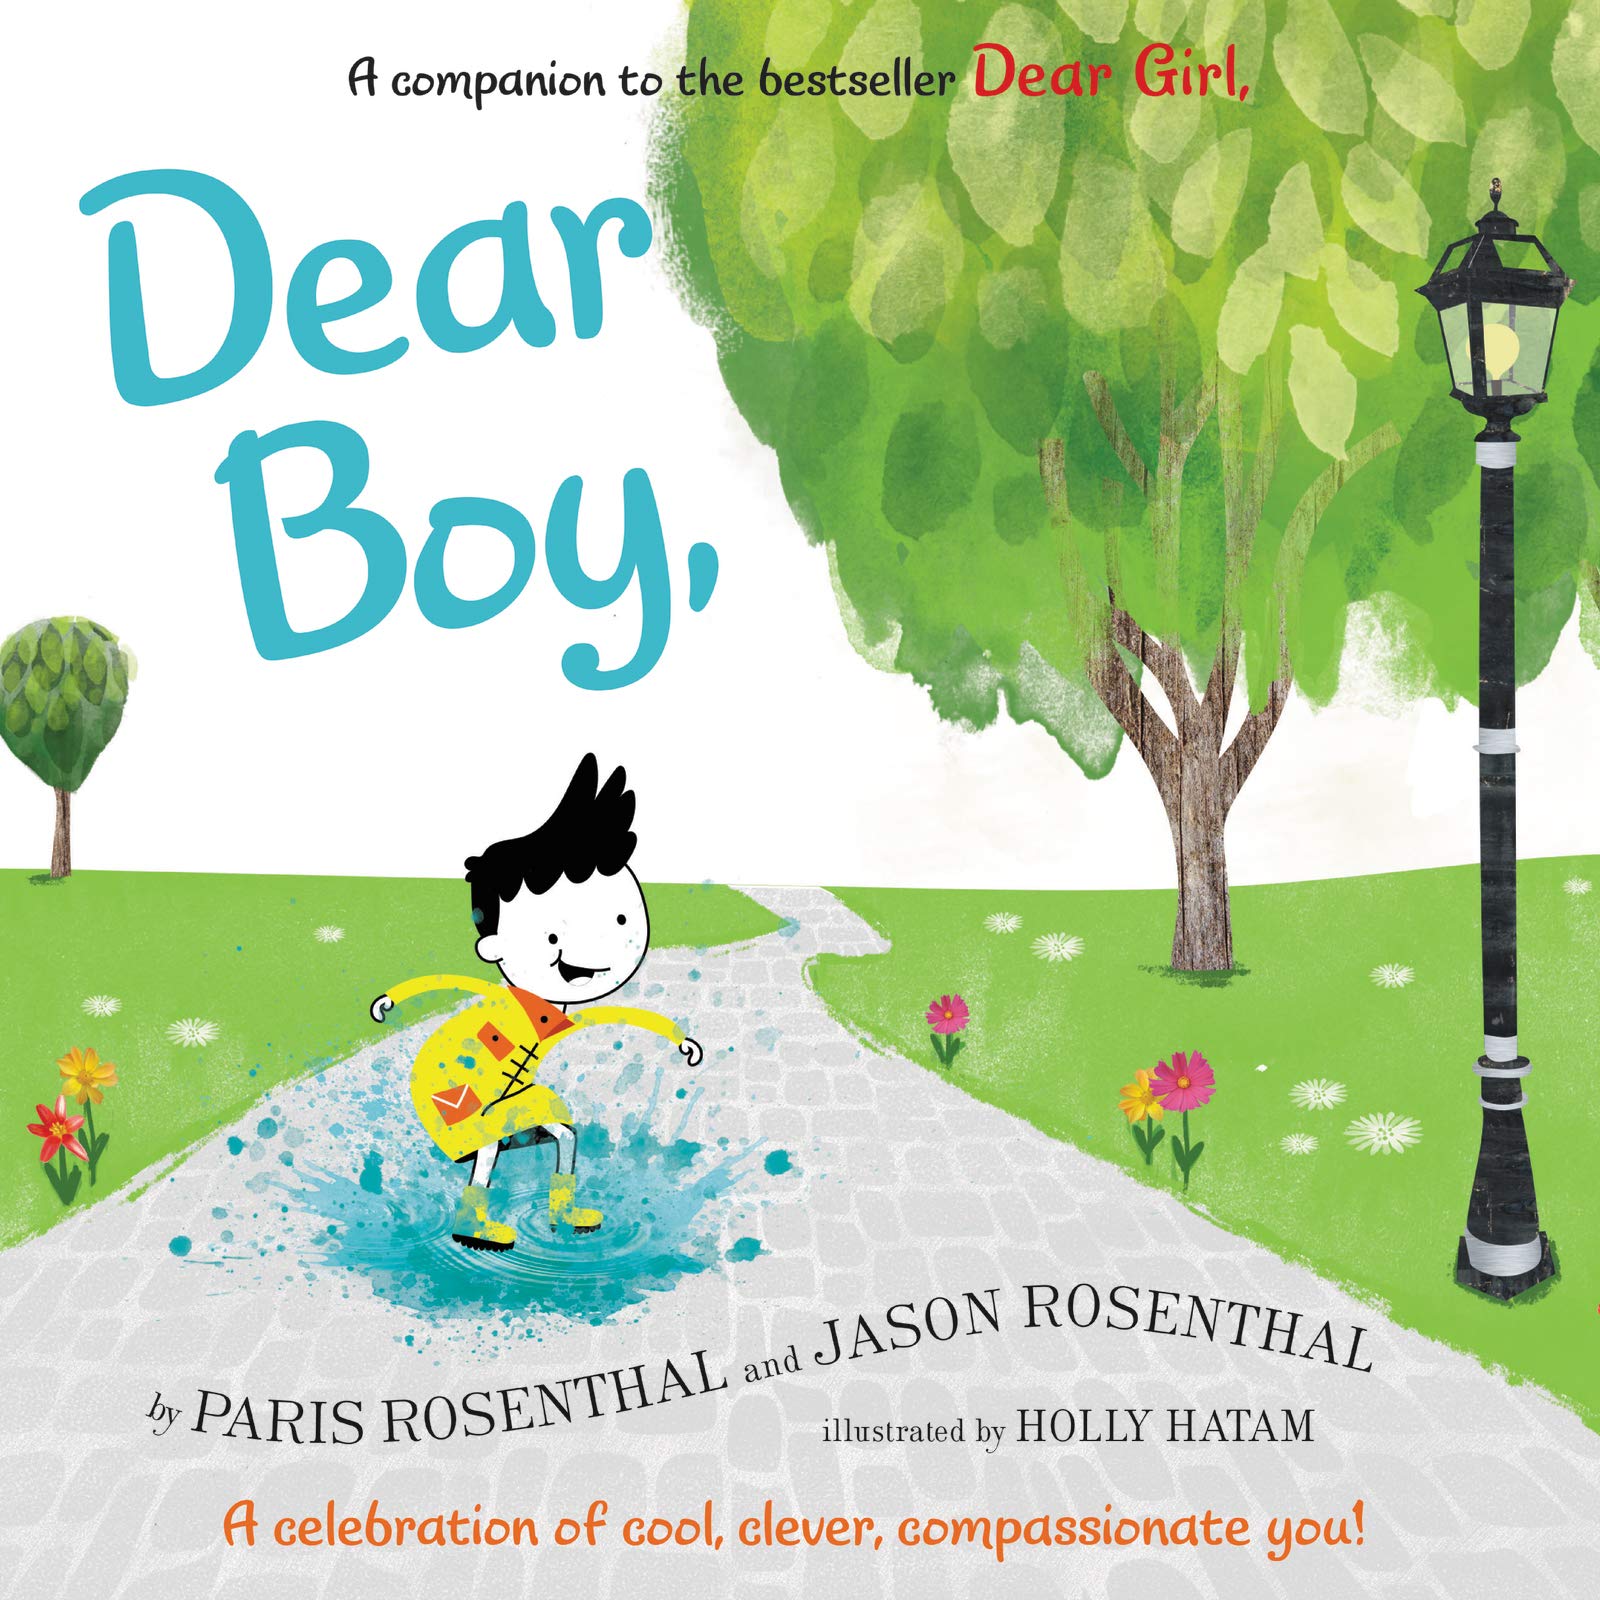 photo of the book "dear boy"